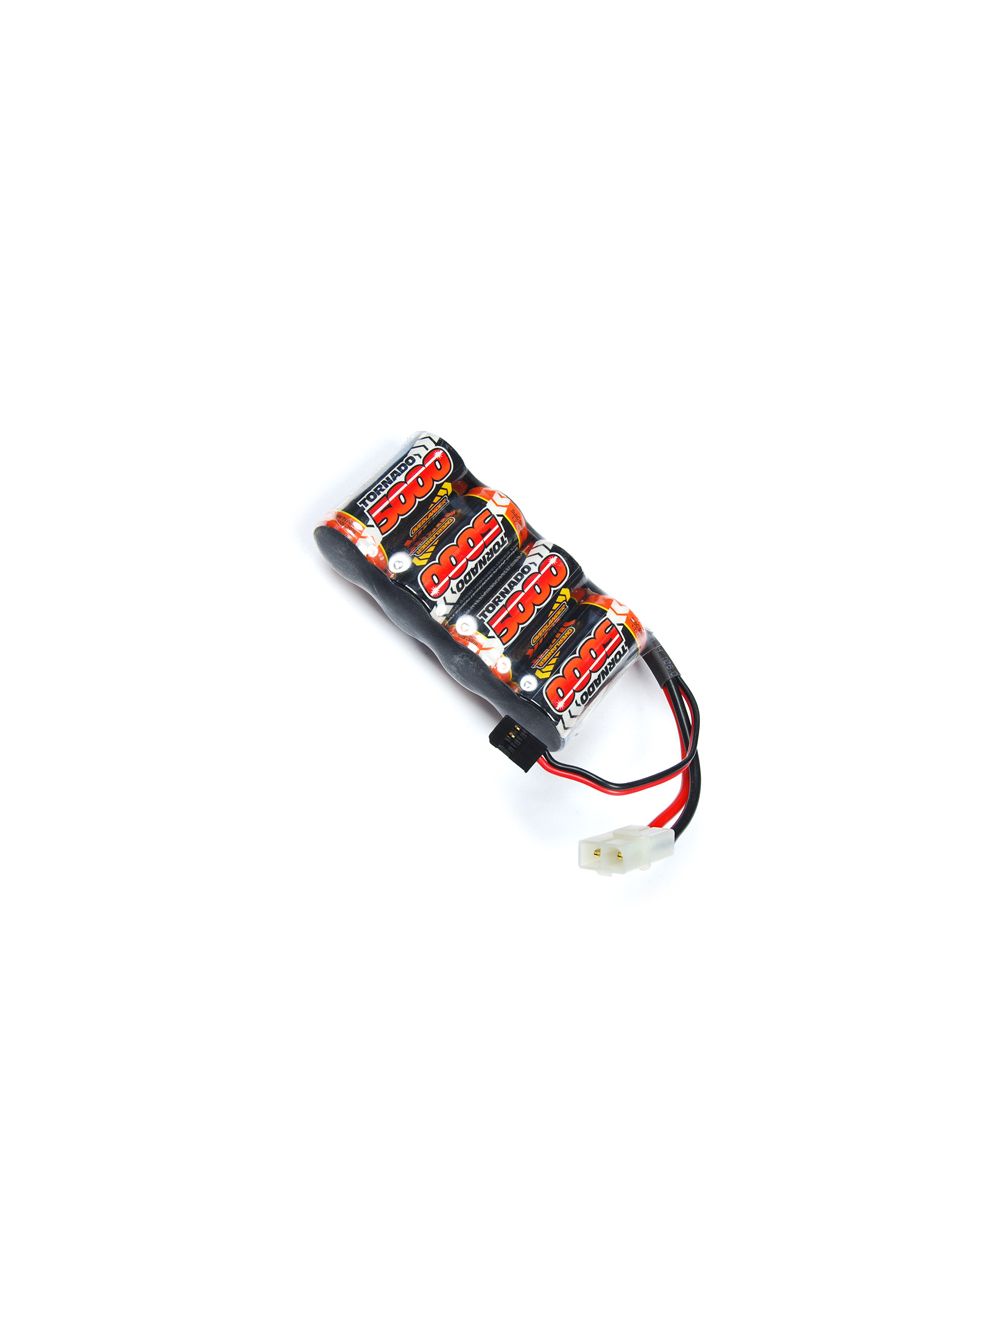 Overlander SubC 5000mAh 4.8V Flat Premium Sport NiMH Battery - Traxxas & JR Connector 1594